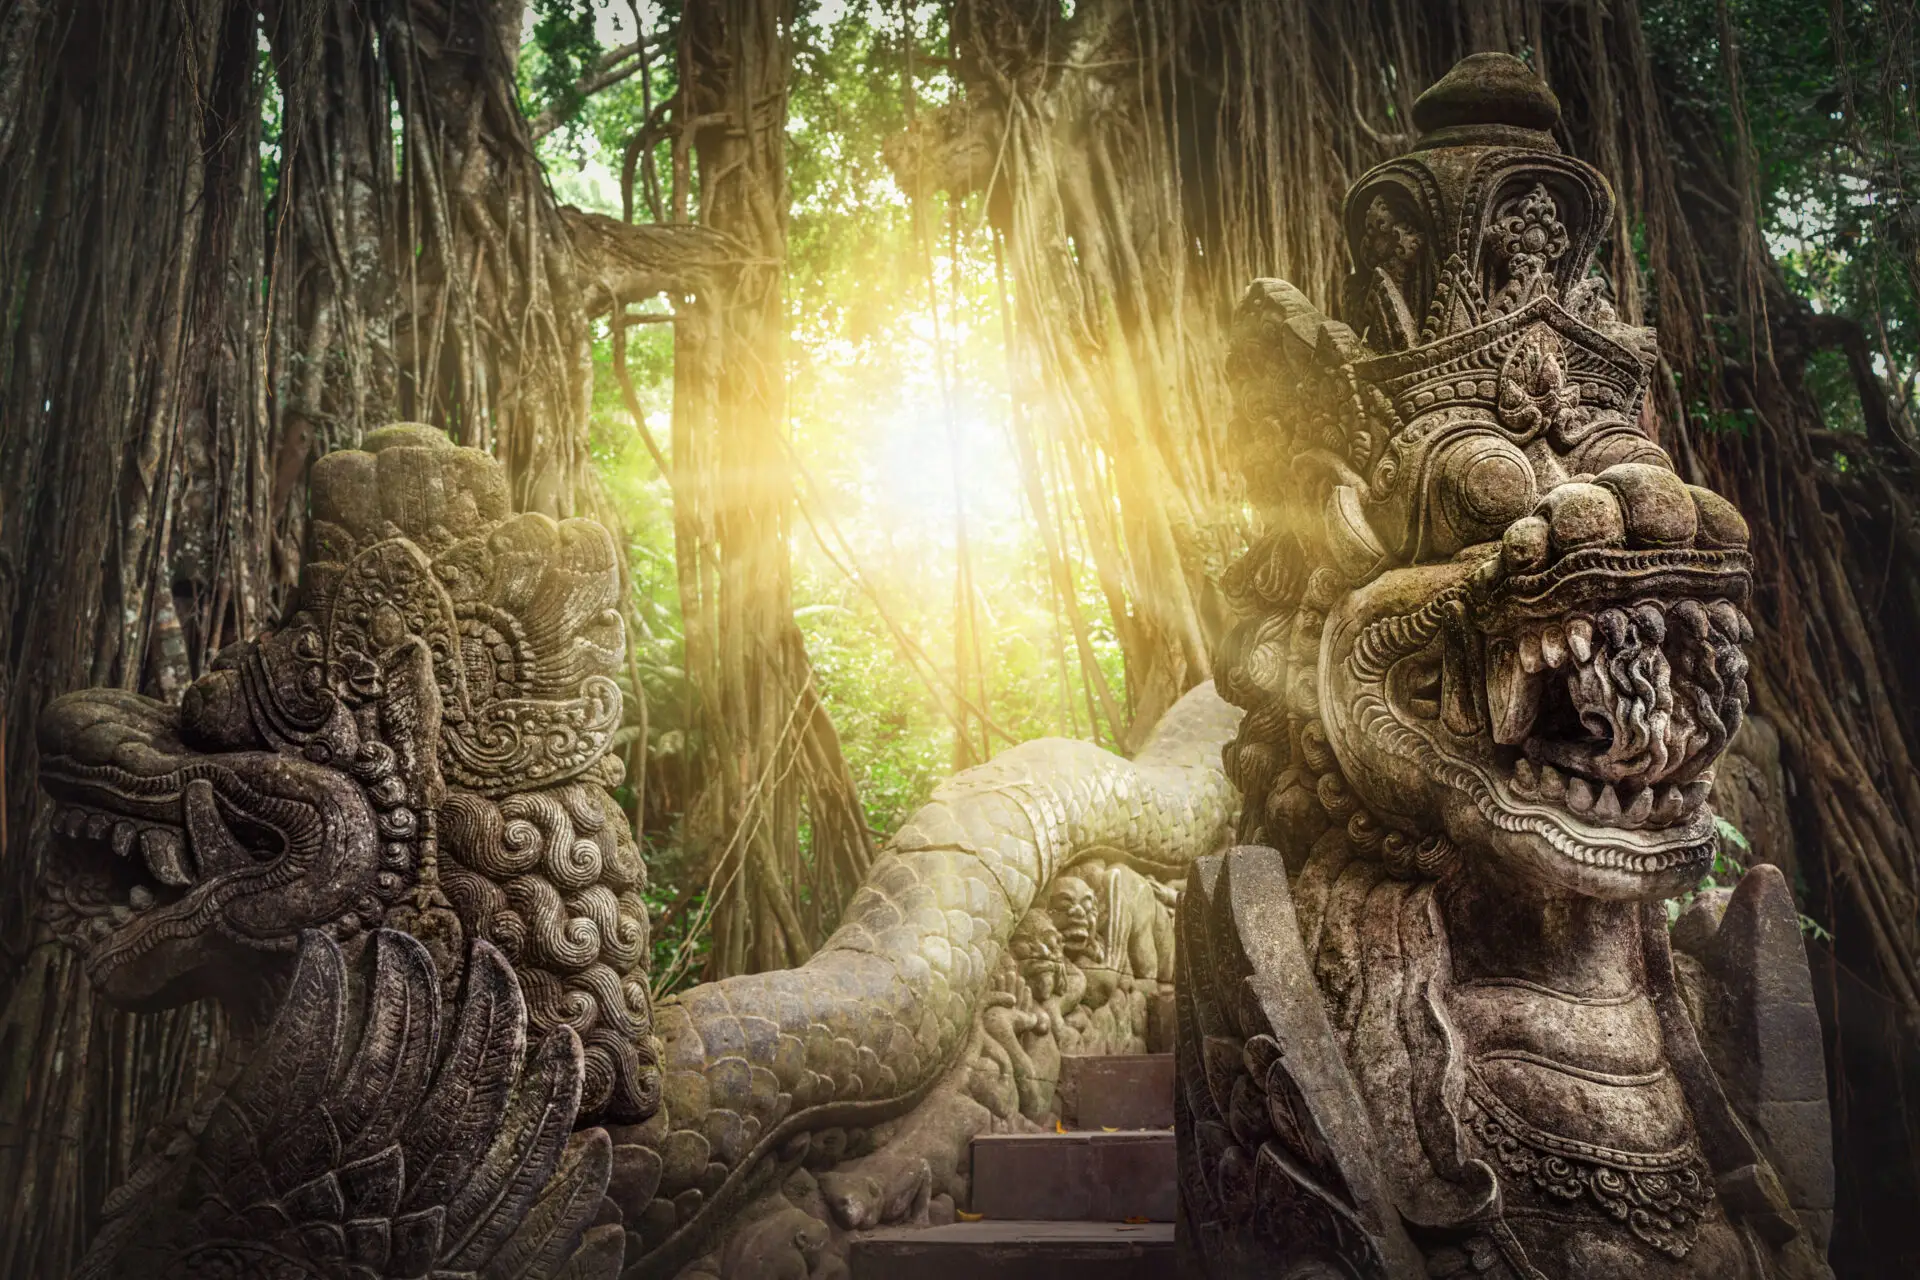 Dragon sculptures in Bali, Indonesia